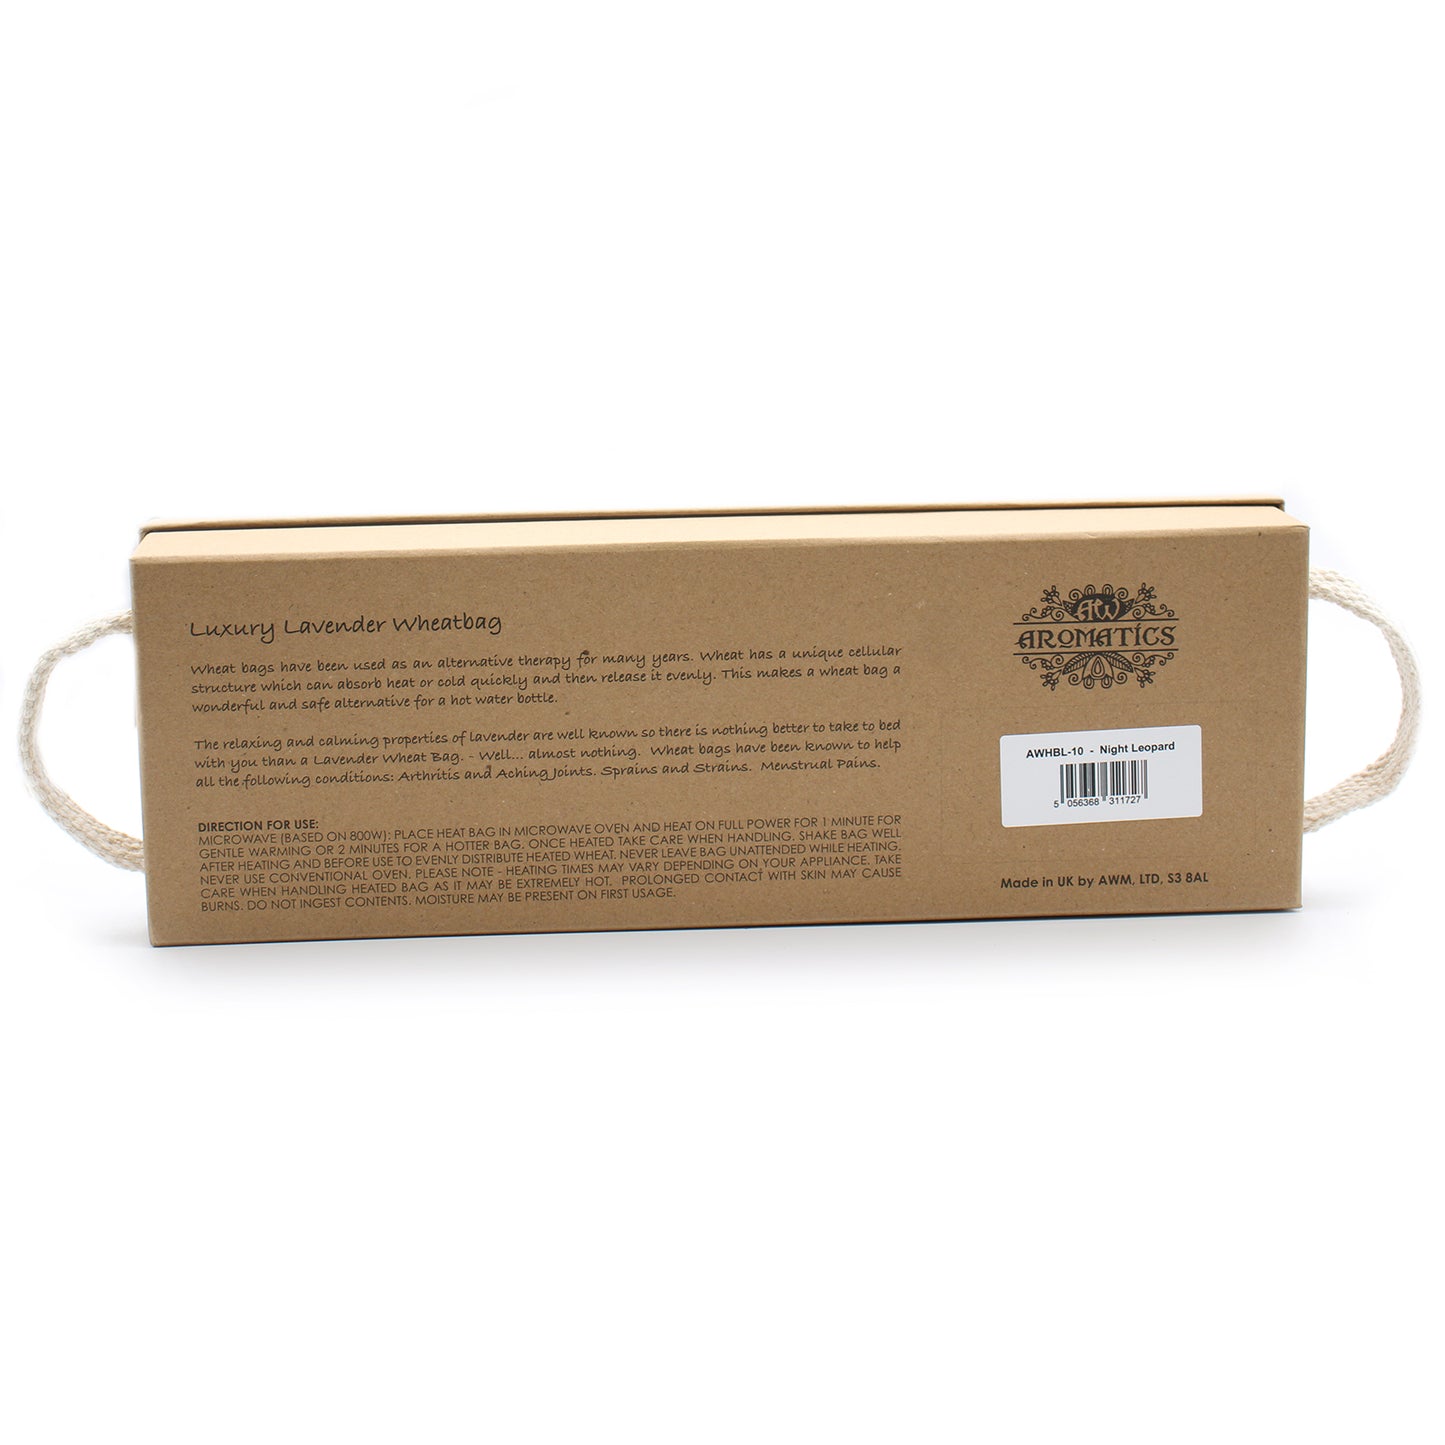 Luxury Lavender  Wheat Bag in Gift Box  - Night Leopard